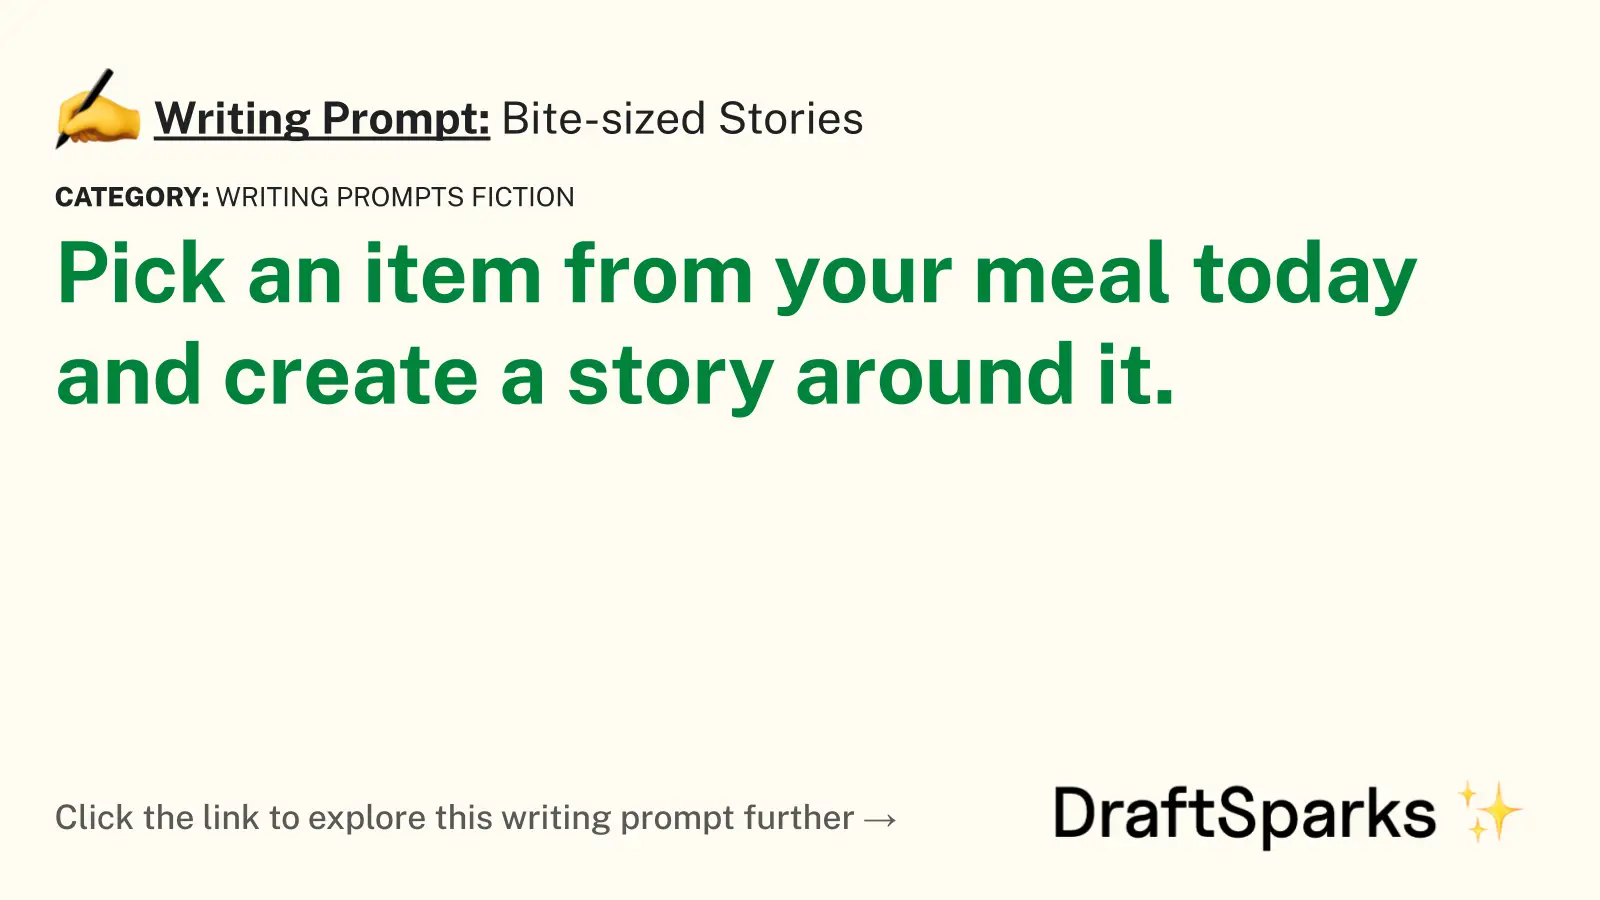 Bite-sized Stories